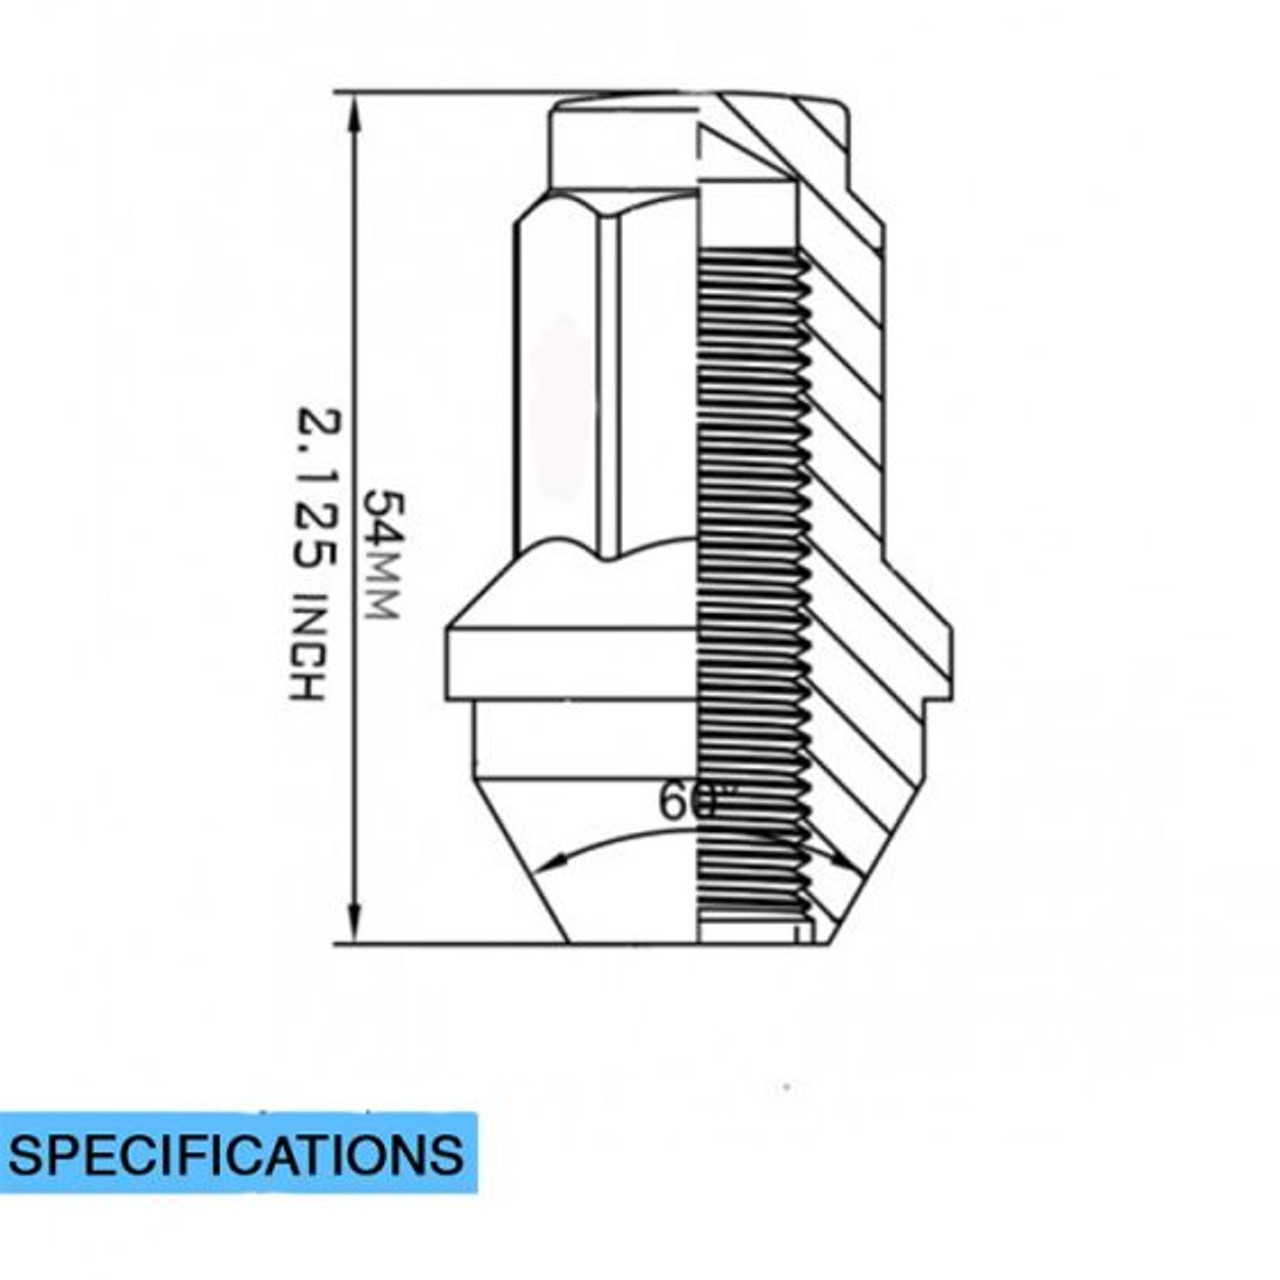 24 Pieces Stock Factory OEM Style Lug Nuts - Install Kit (Black) - Ford (13/16 Hex) M14x1.5 (6 Lug Kit)